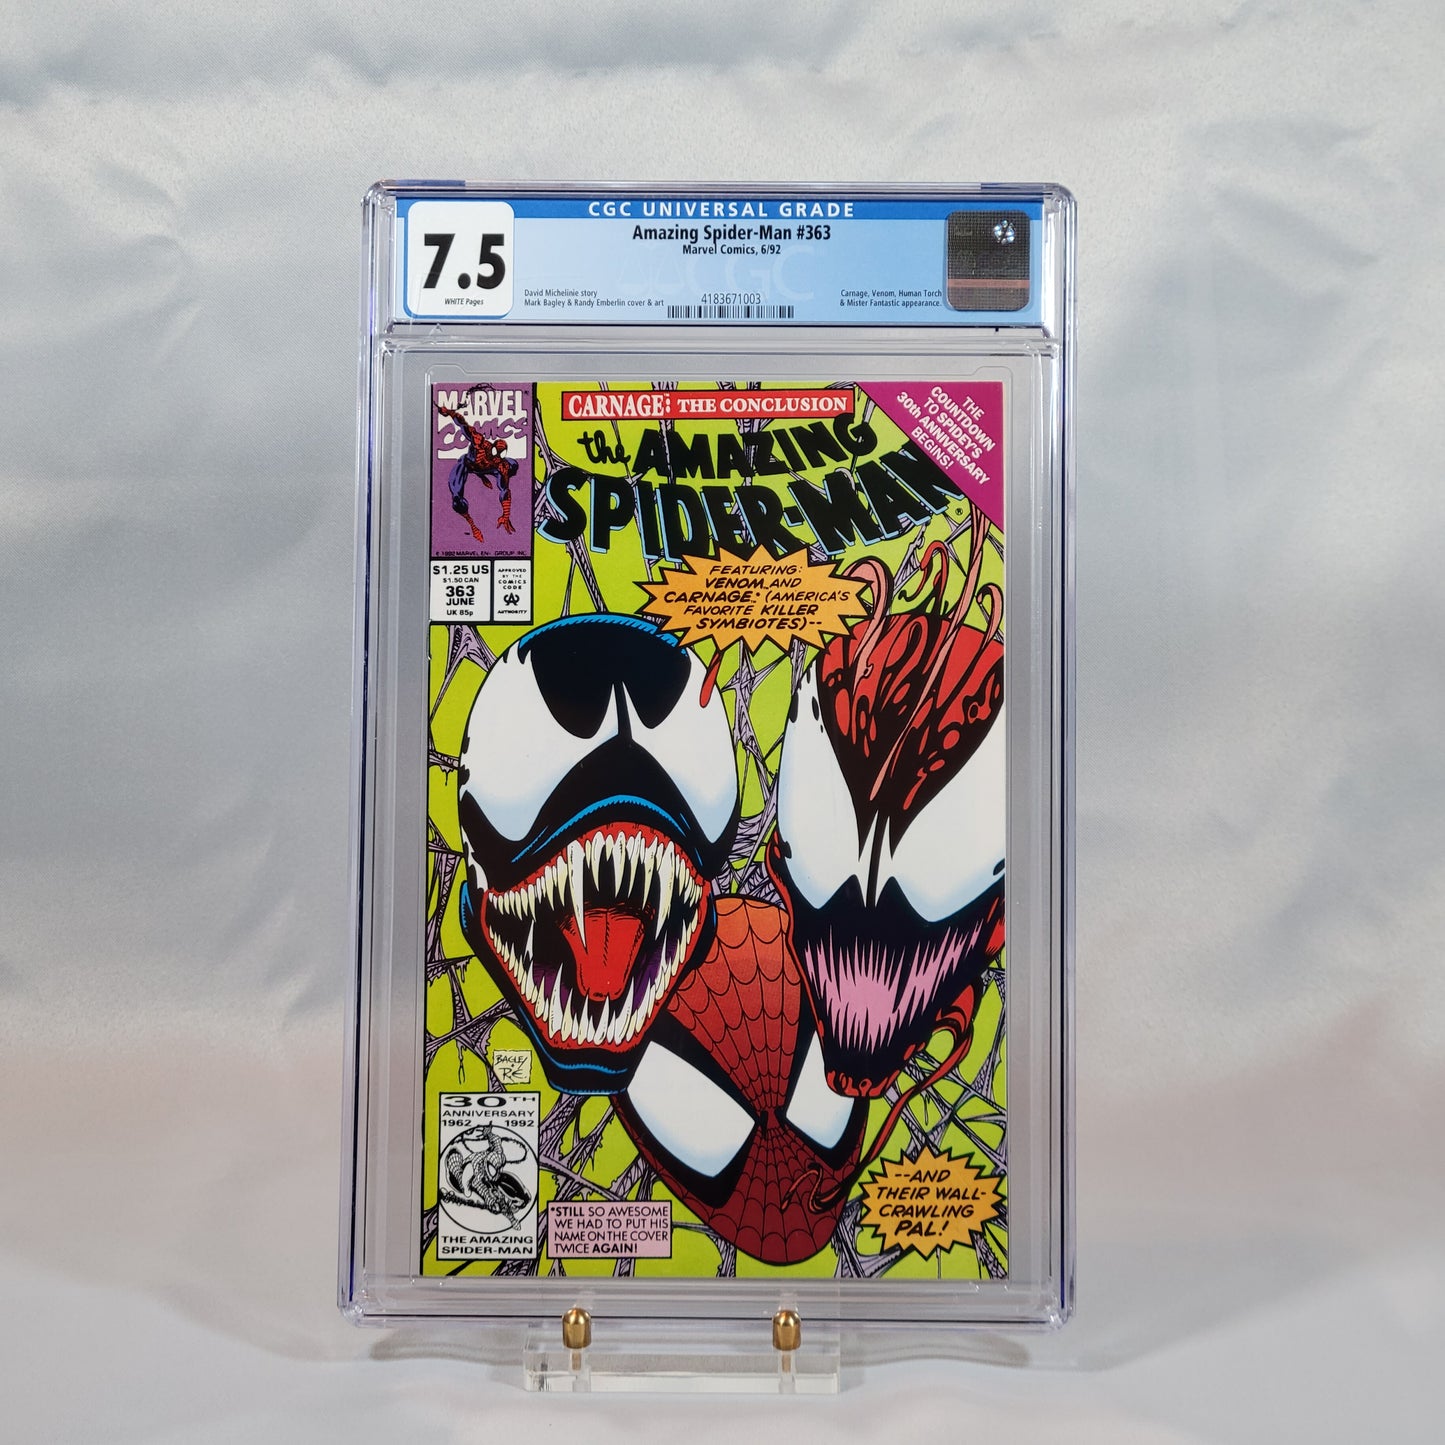 Amazing Spiderman #361-363 Collection